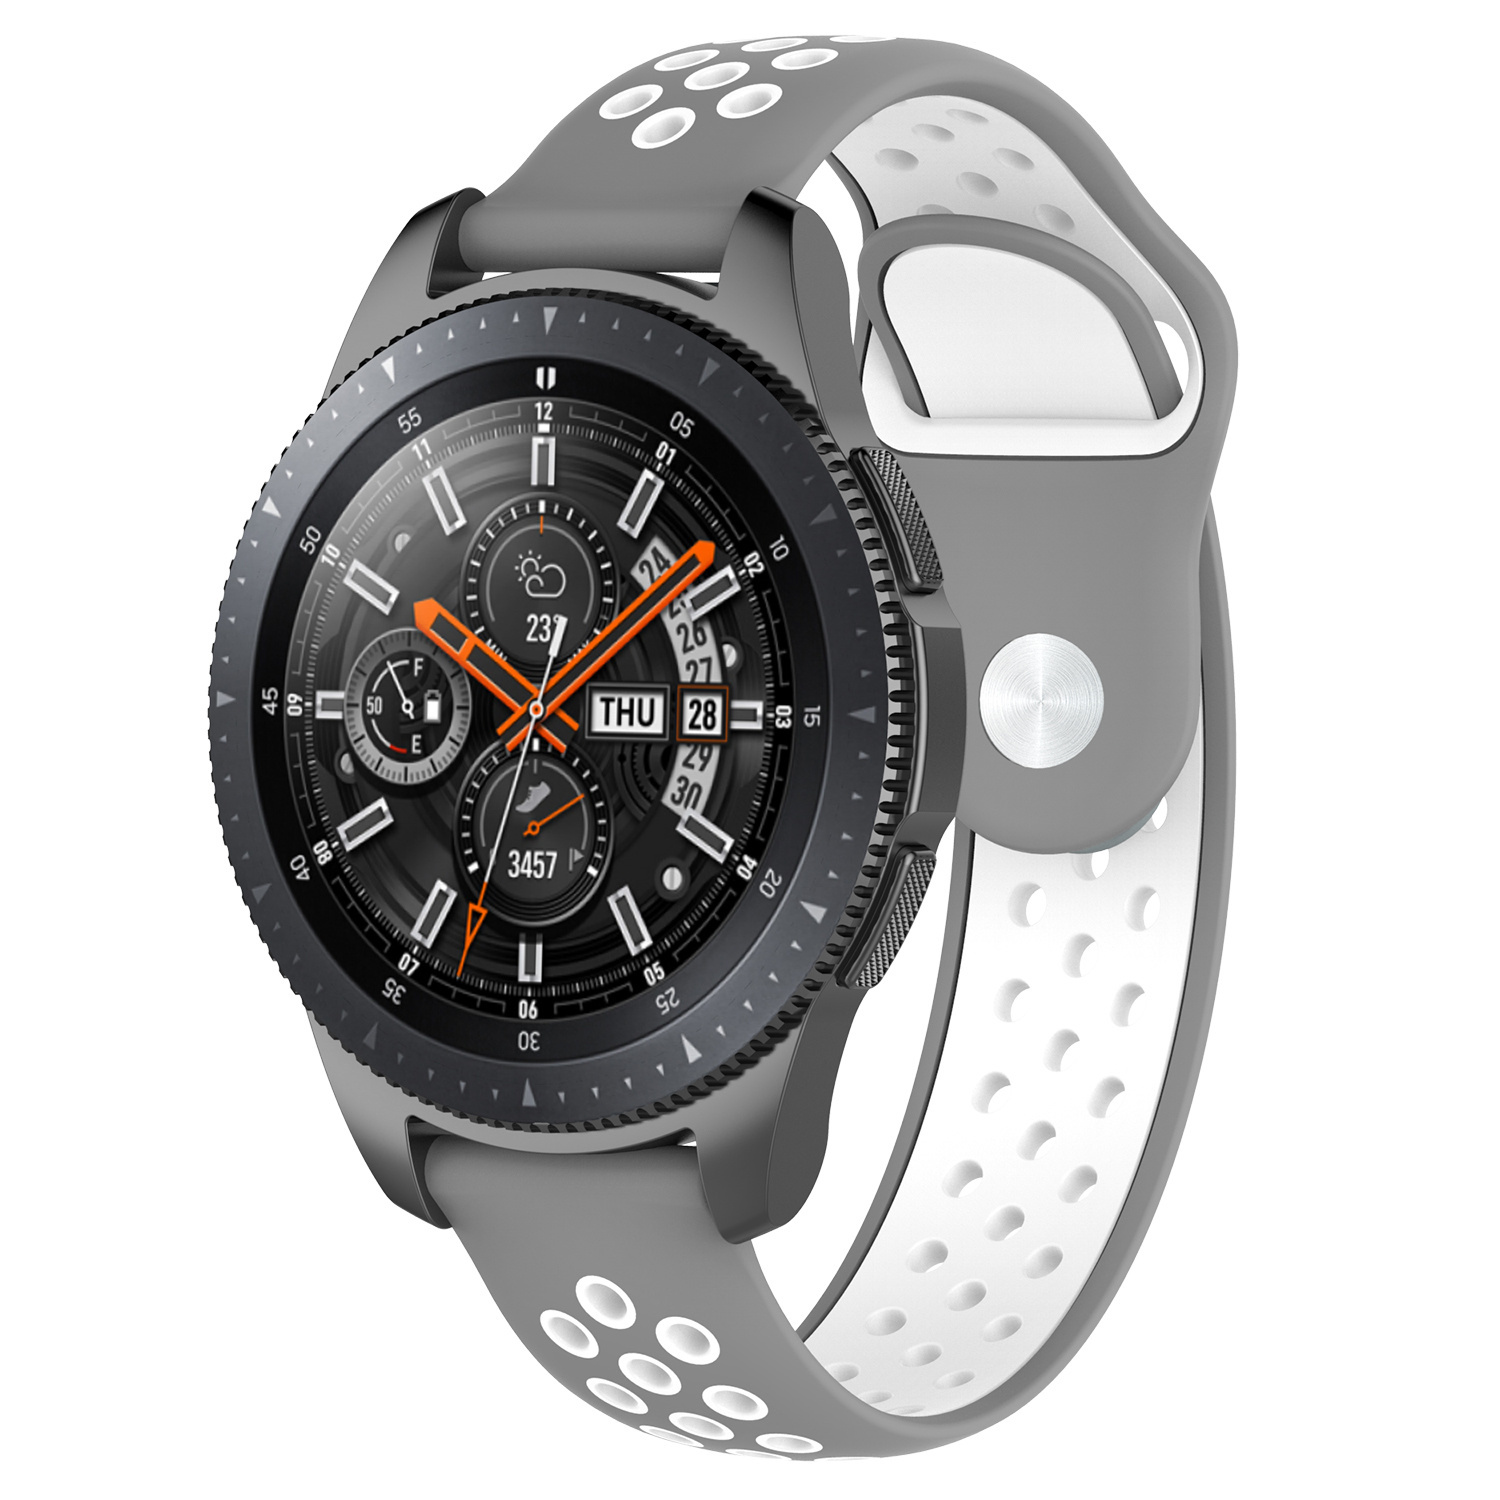 Cinturino doppio sport per Samsung Galaxy Watch - grigio bianco